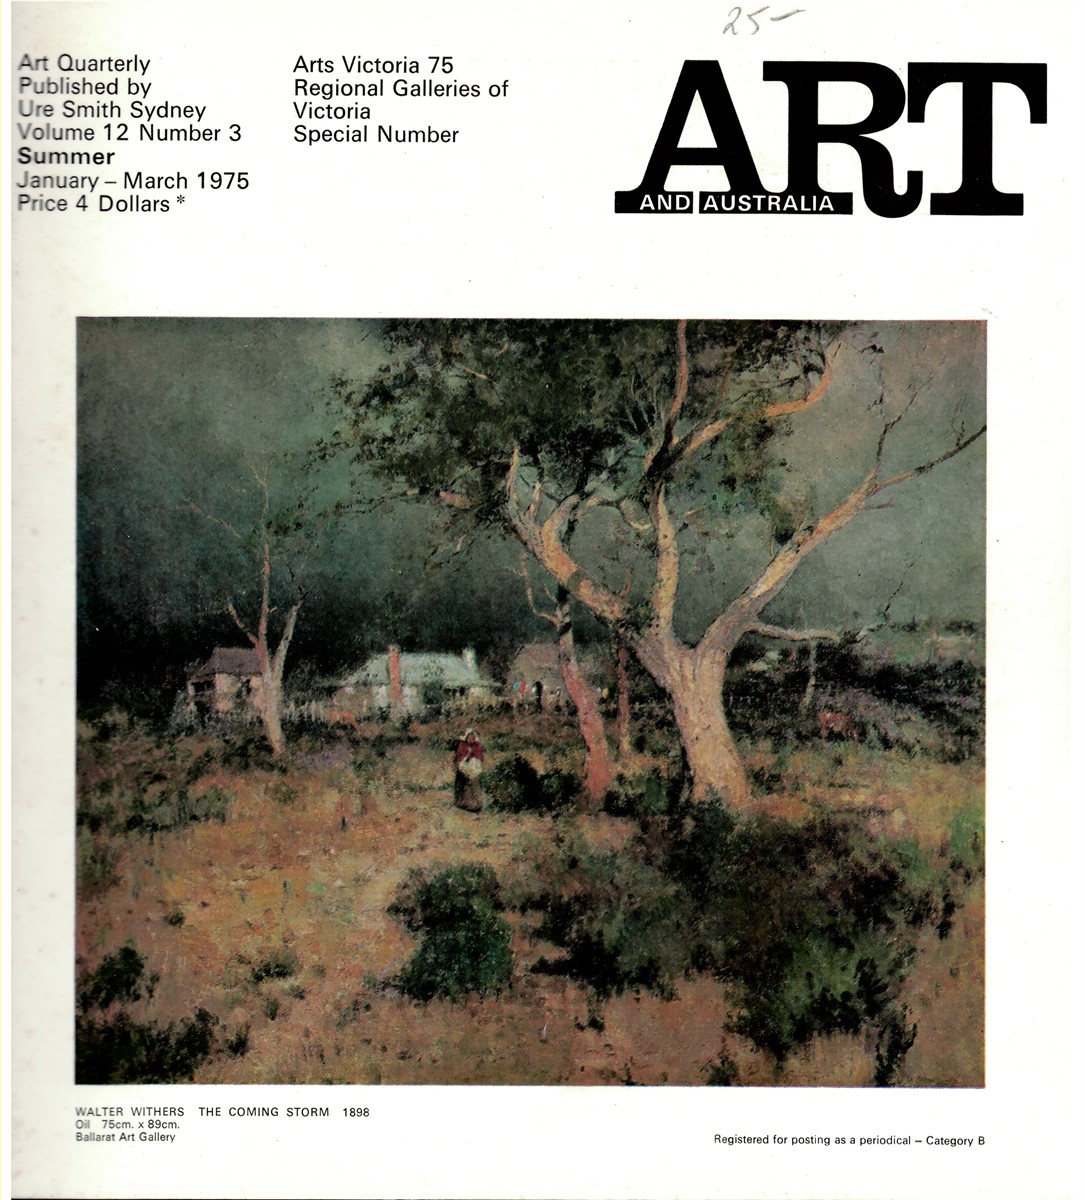 HORTON, MERVYN (EDITOR) - Art and Australia. Volume 12 Number 3 Jan-March 1975